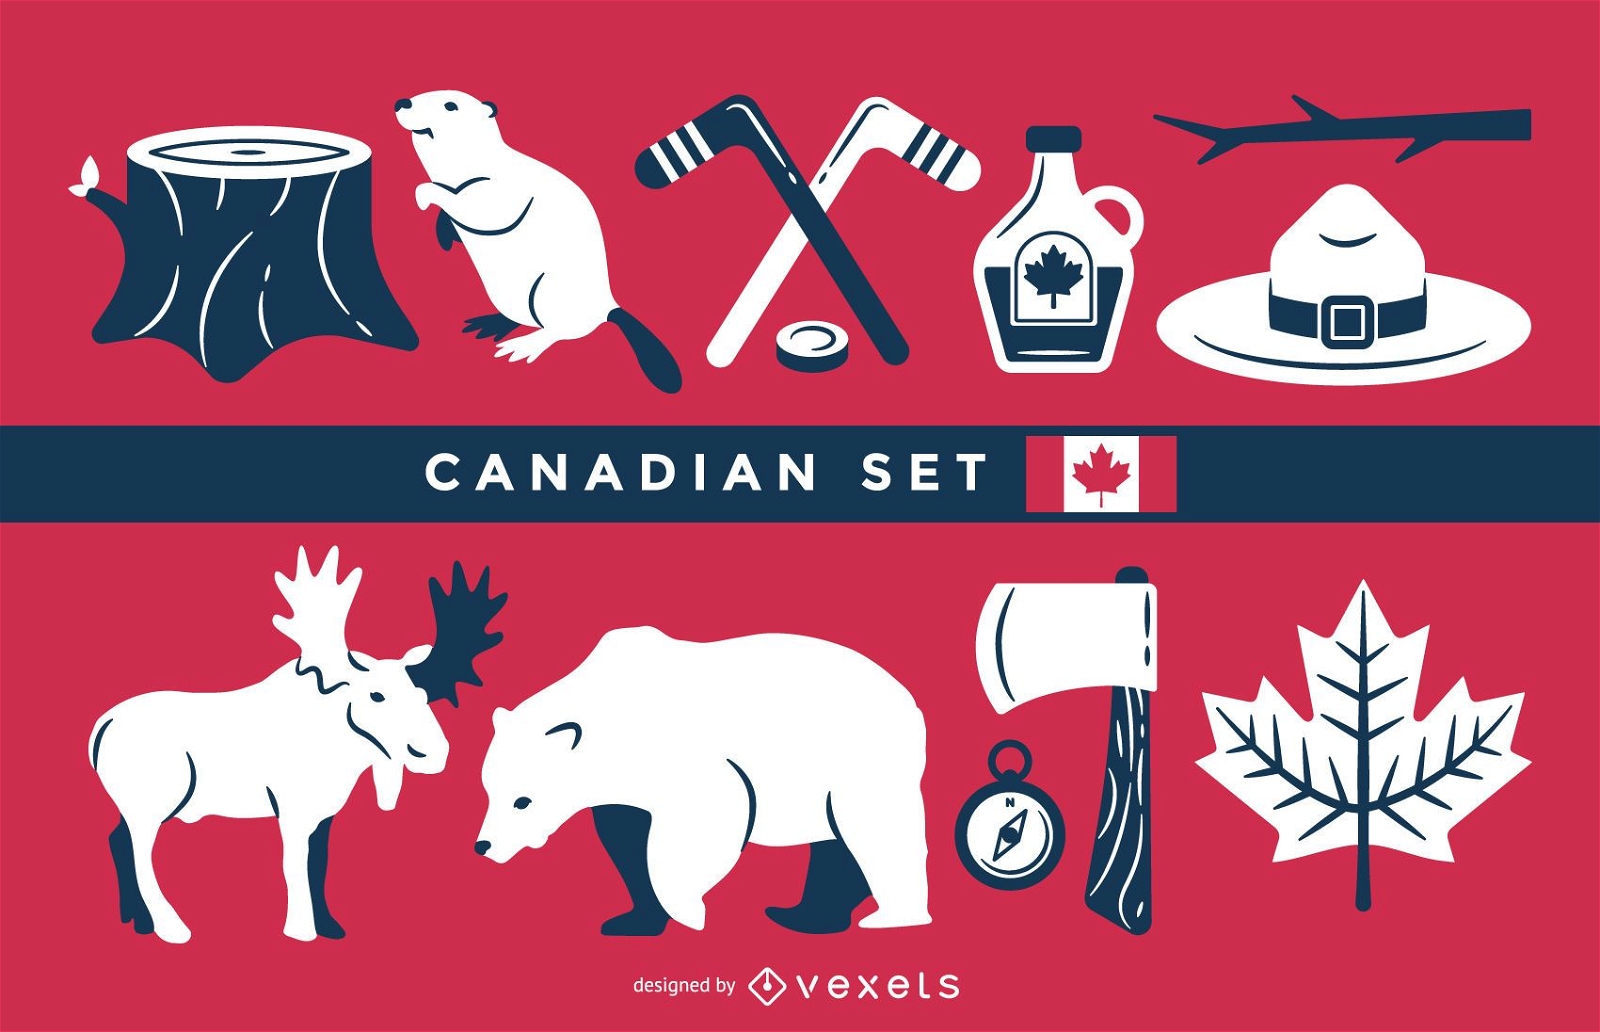 Canadian illustration set